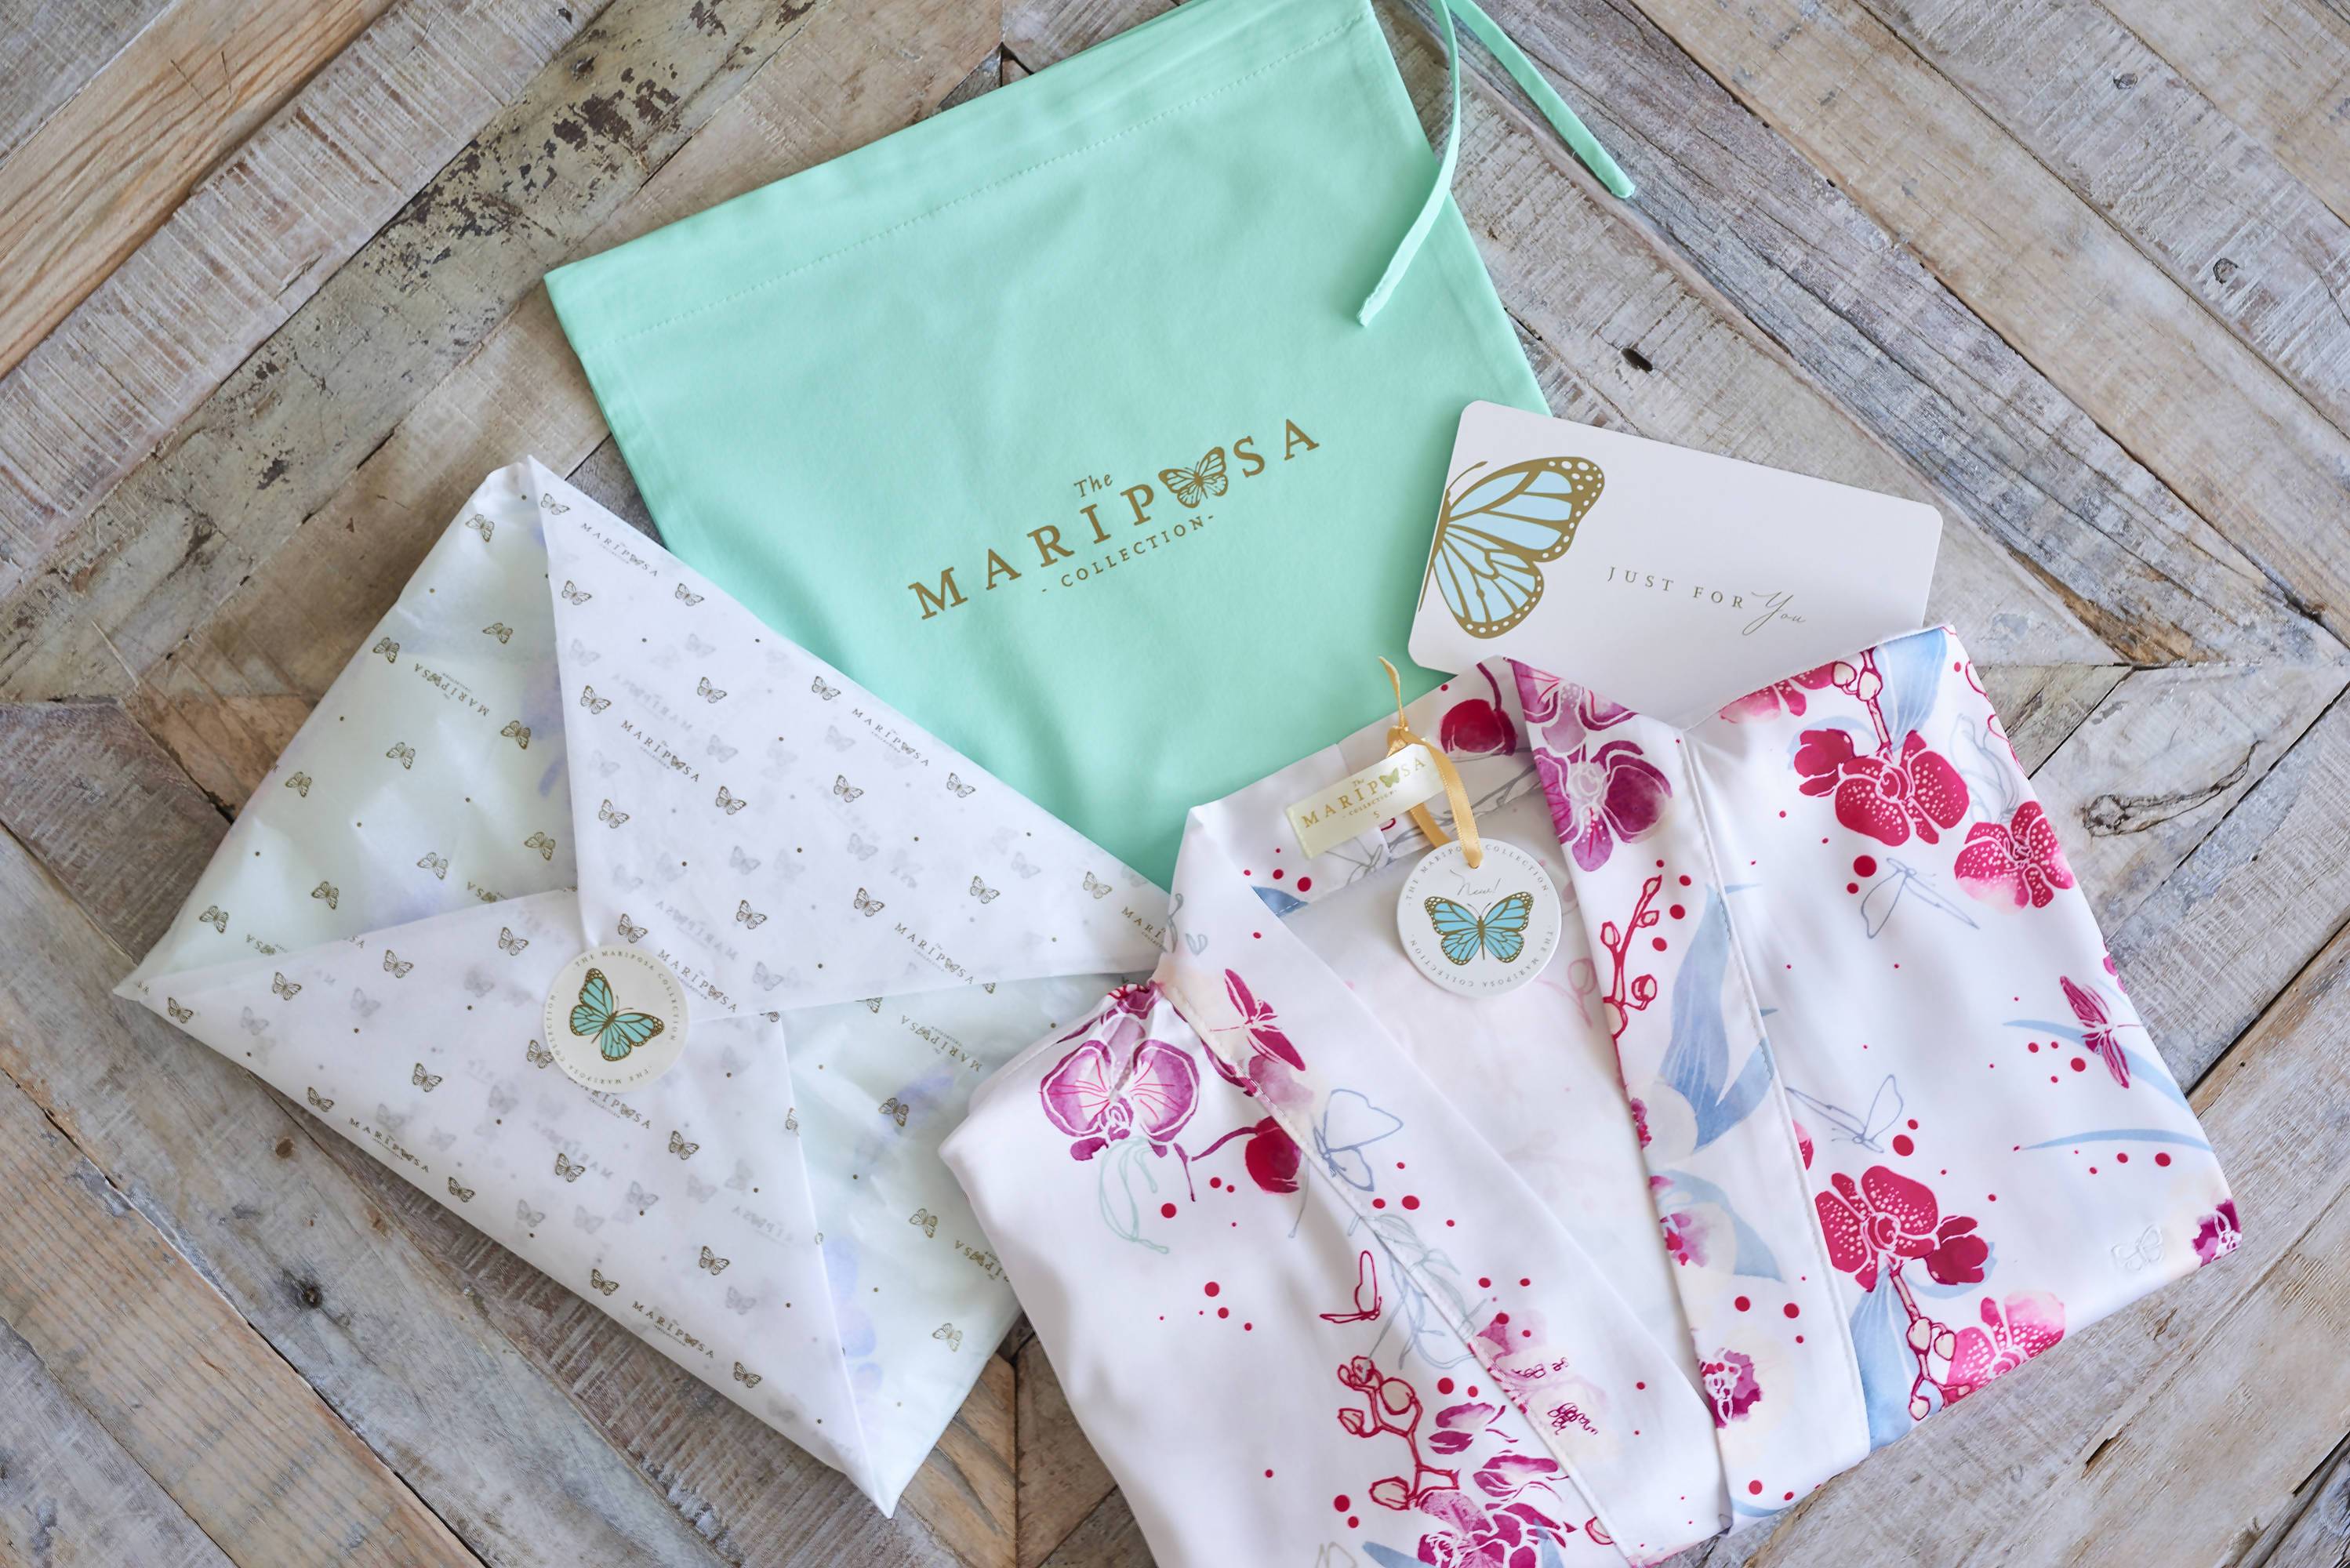 Orchid Kimono Robe (Short) - Sleepwear for Women - The Mariposa Collection - Naiise